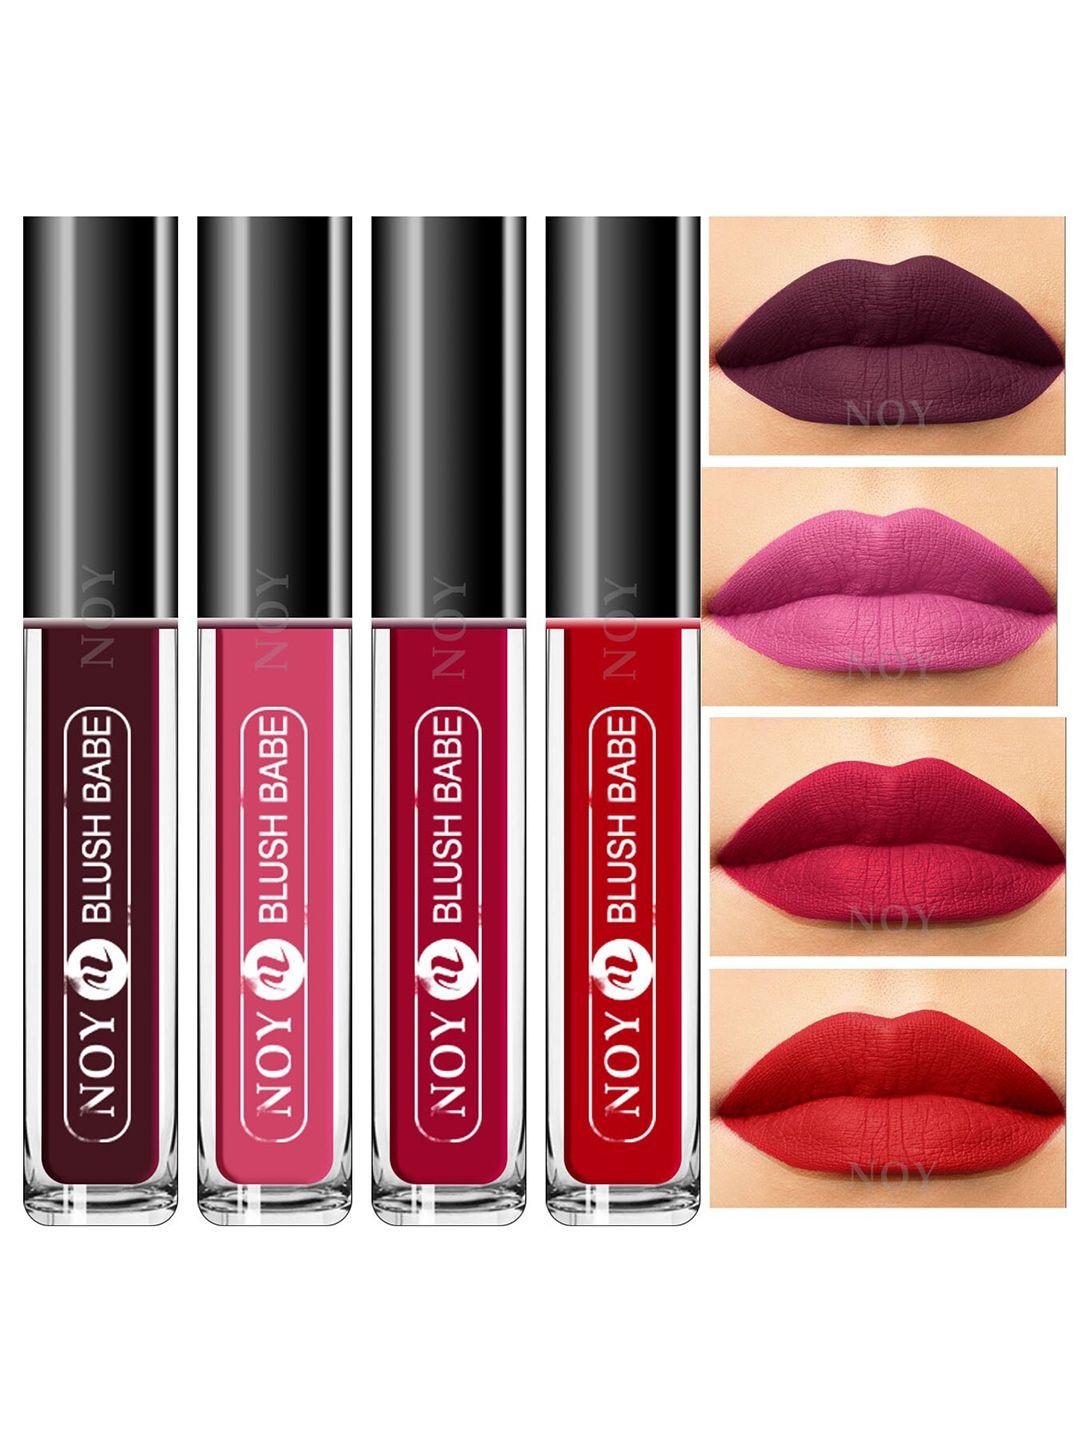 noy set of 4 blush babe smudge-free matte liquid lipstick 4 ml each - shade 01-02-03-04